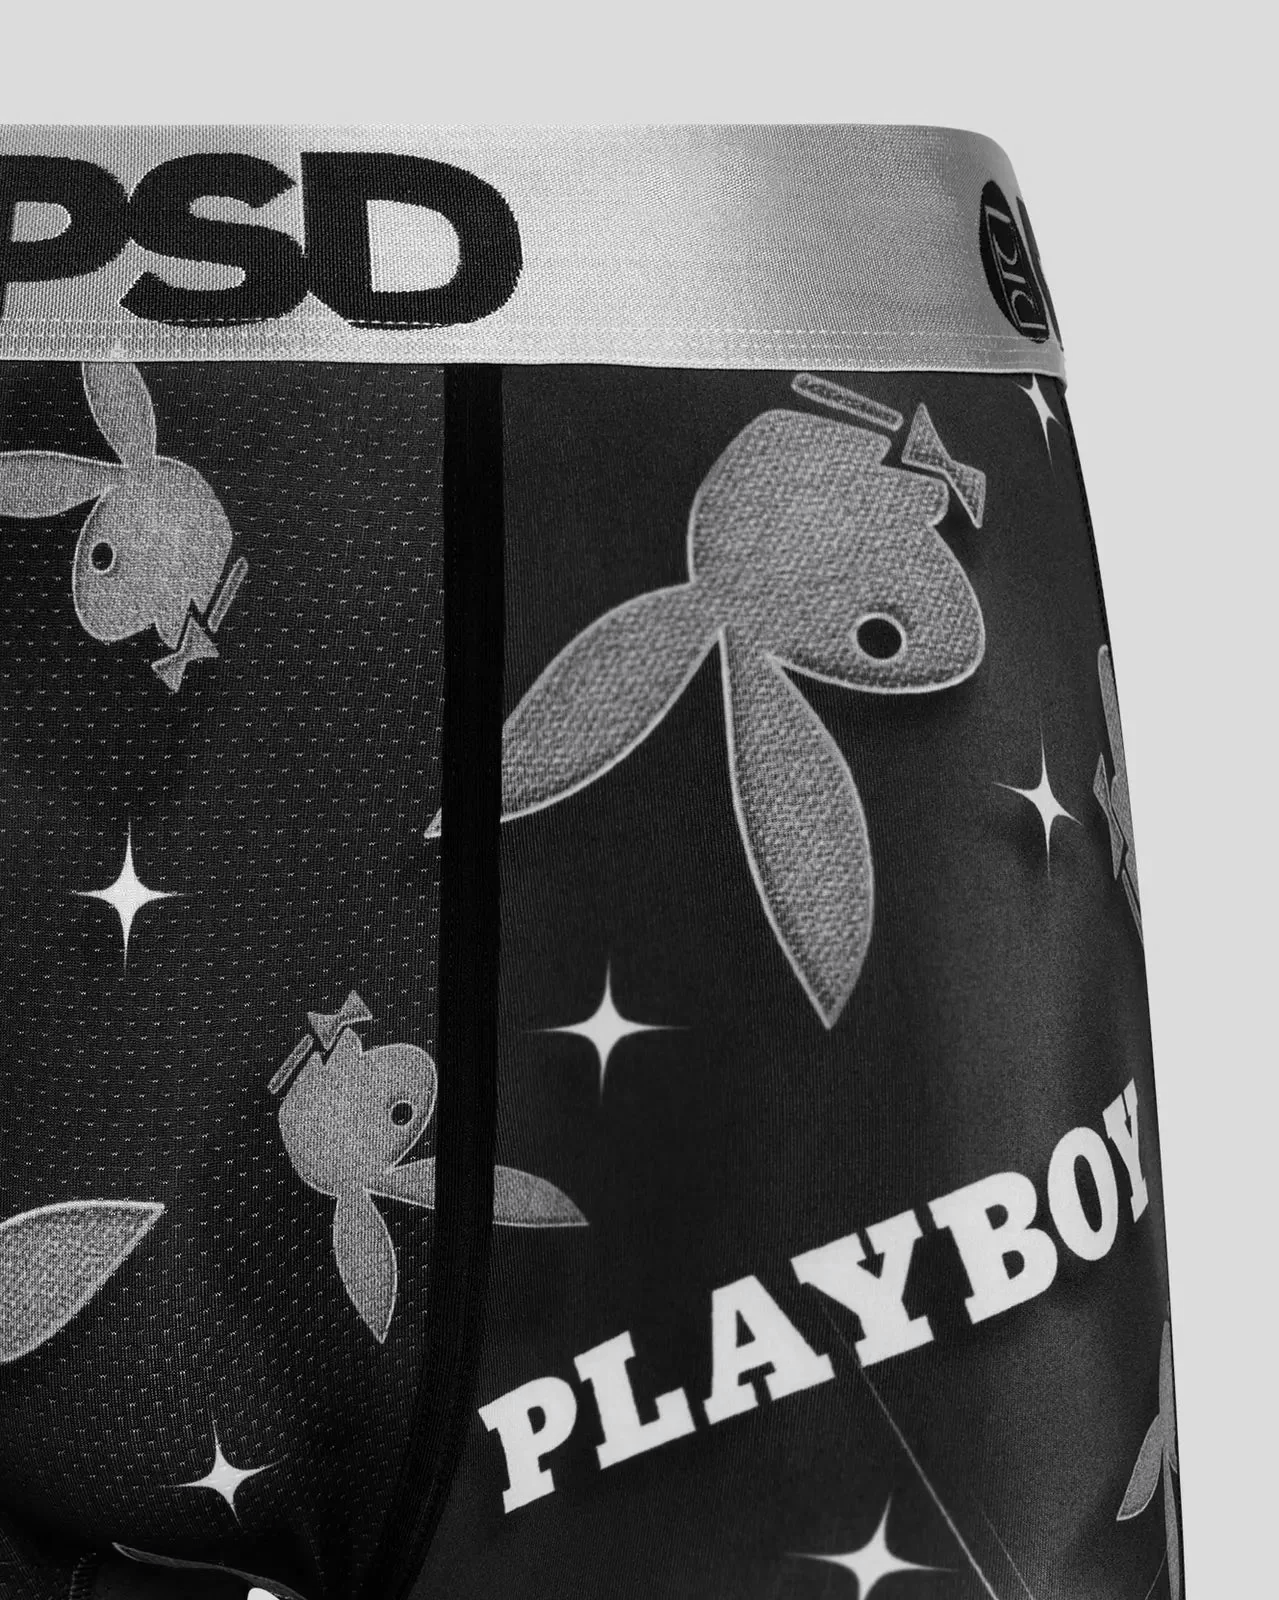 PSD Playboy Strokes Boxer Brief Underwear 